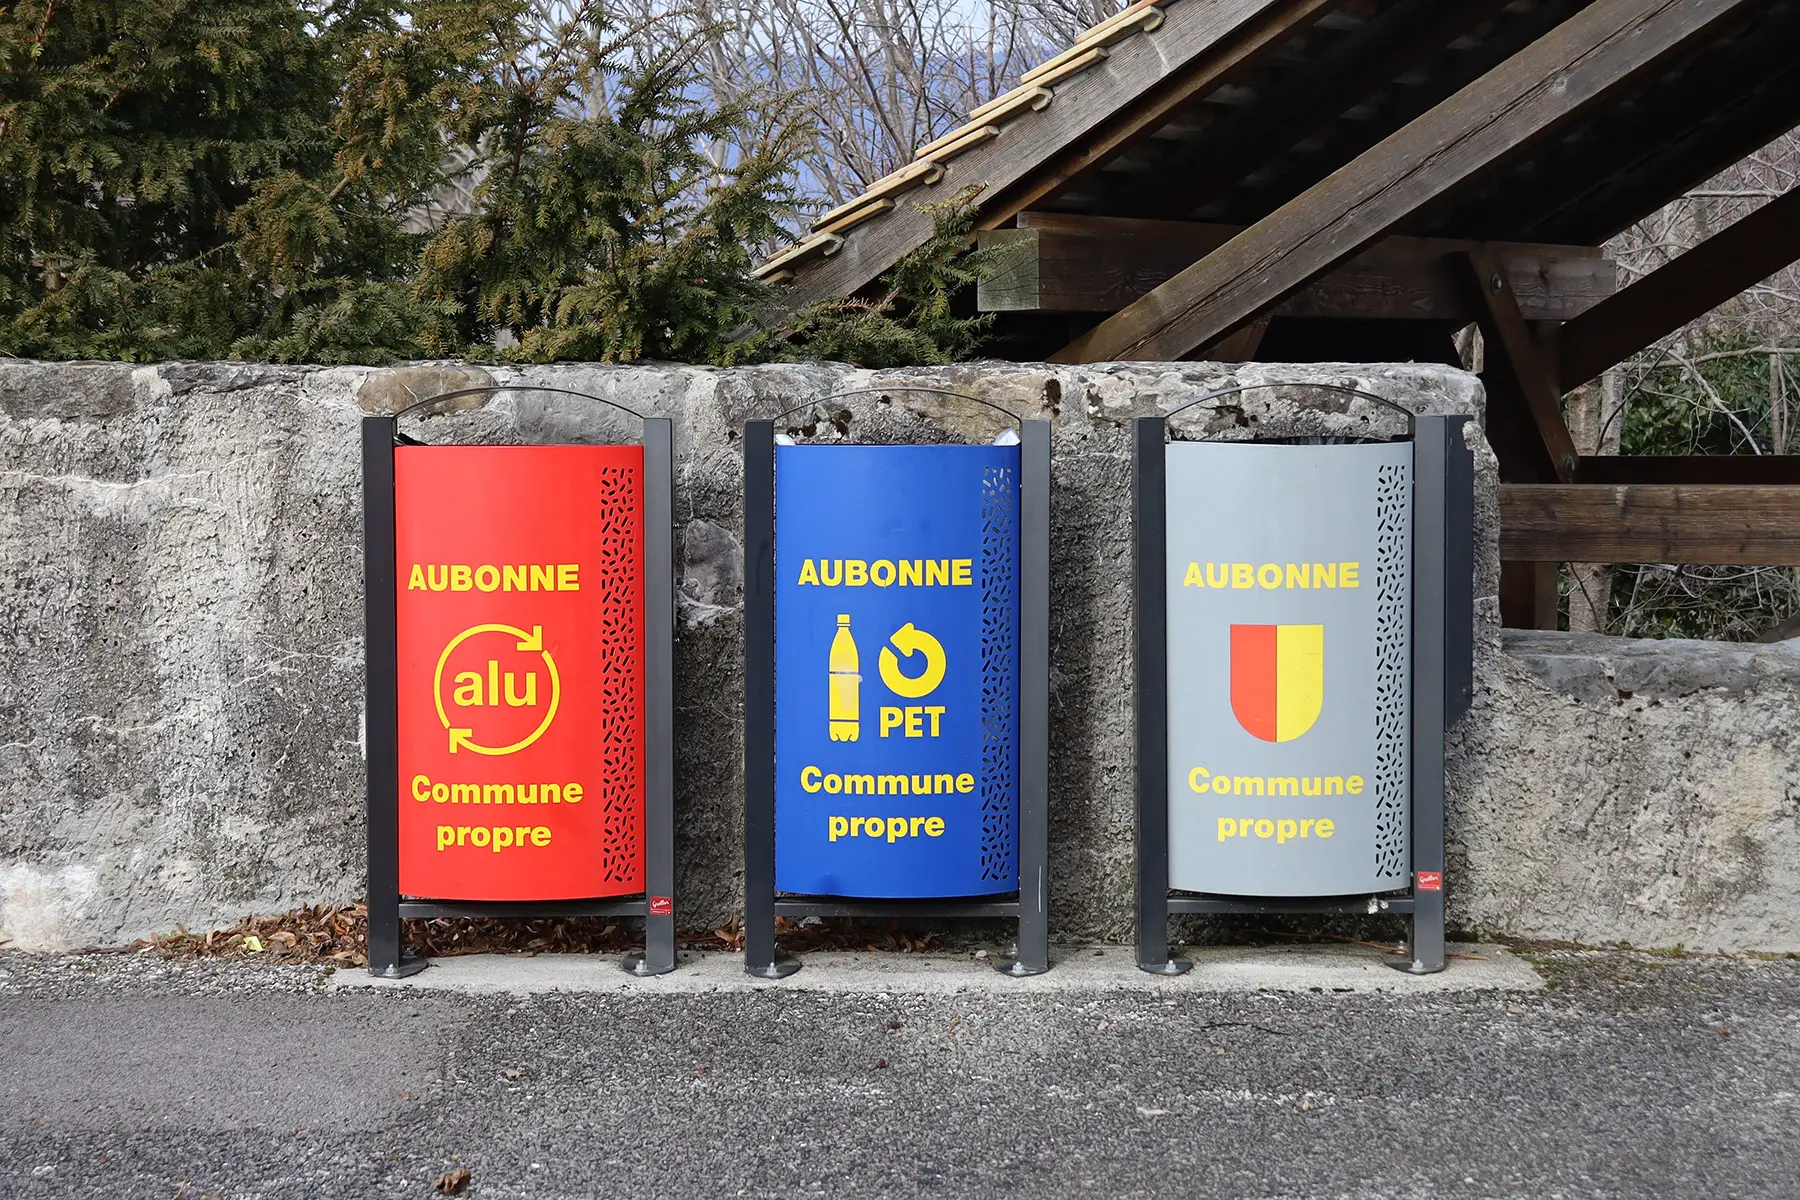 Three recycling bins in Aubonne, Switzerland